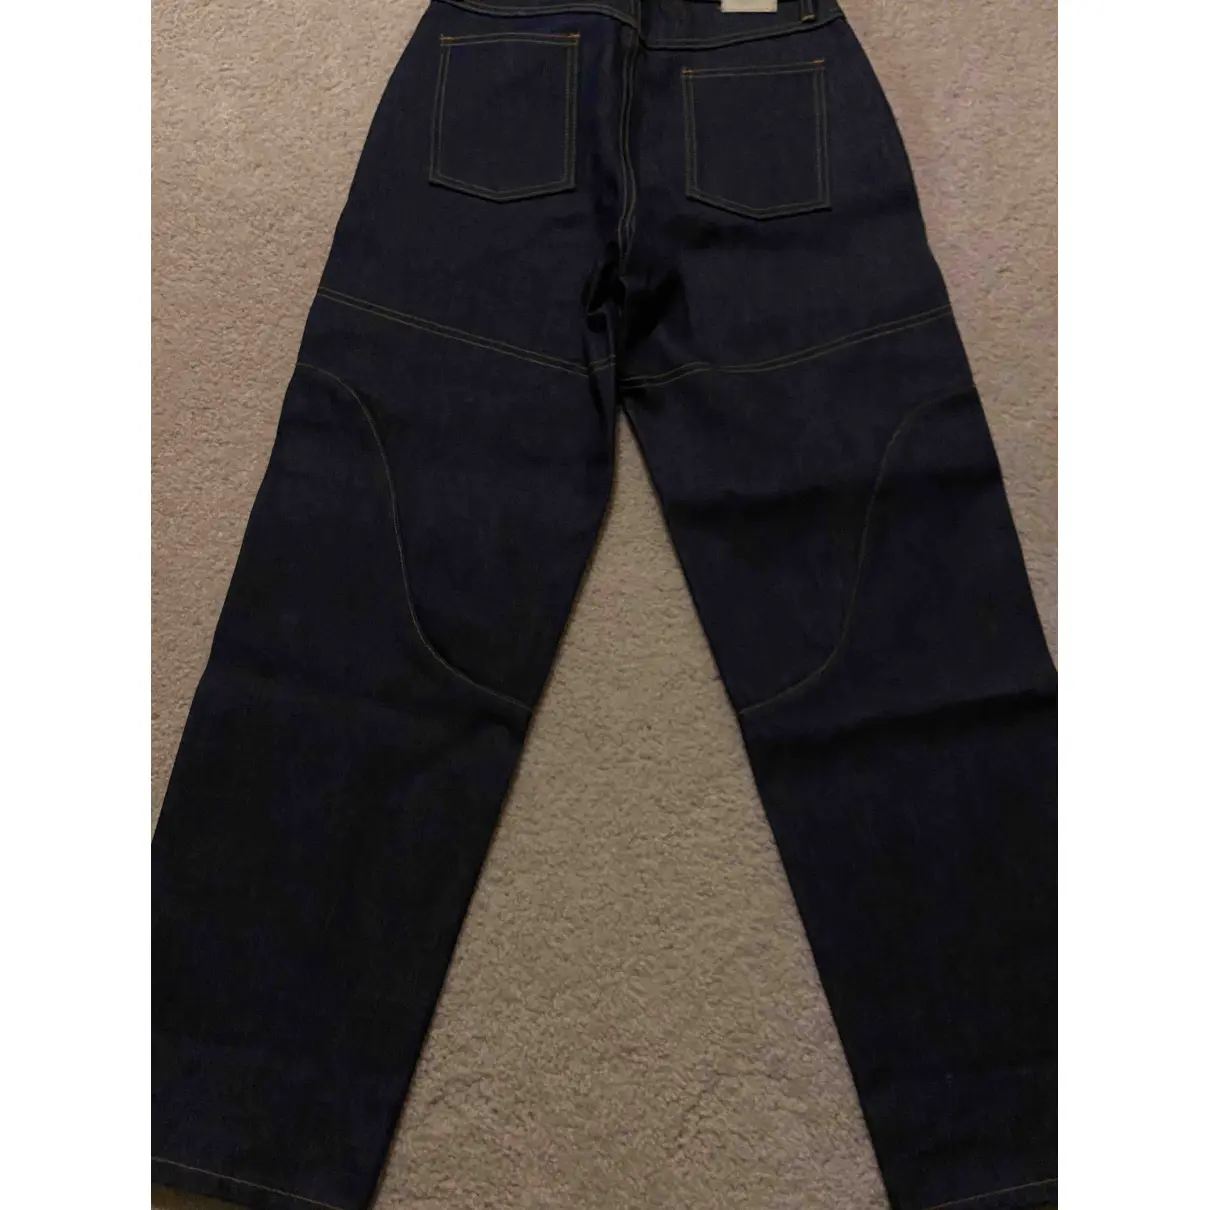 Buy Totokaelo Blue Denim - Jeans Jeans online